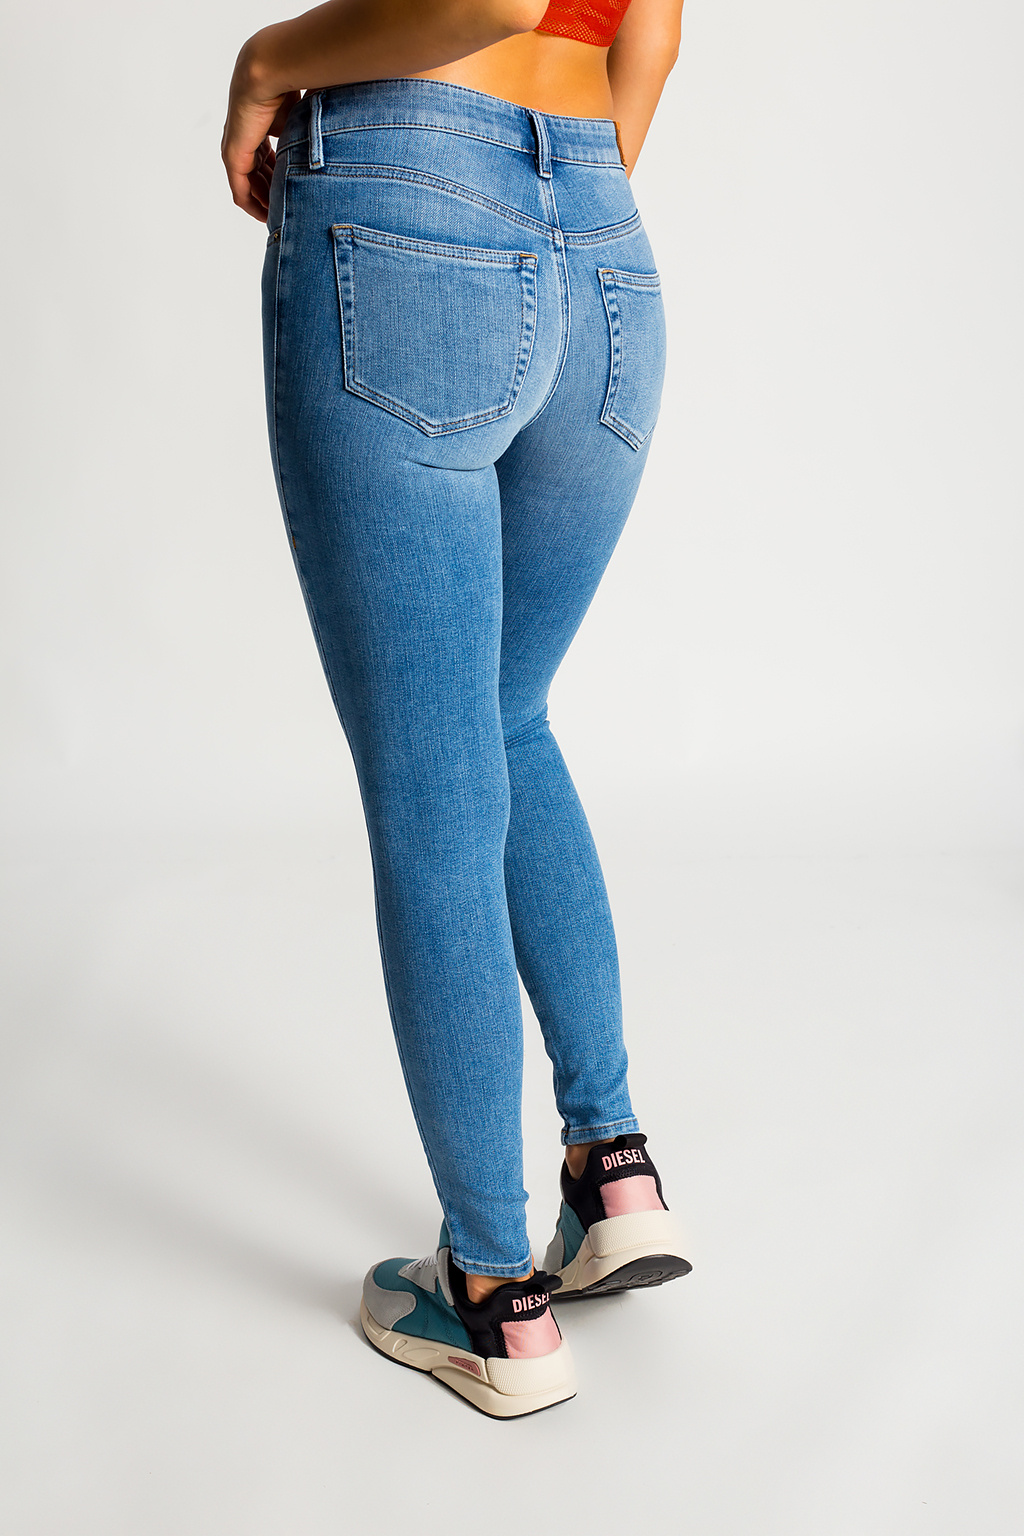 CamaragrancanariaShops Guinea - 'Slandy' jeans Diesel - Houdini W Dock Pants